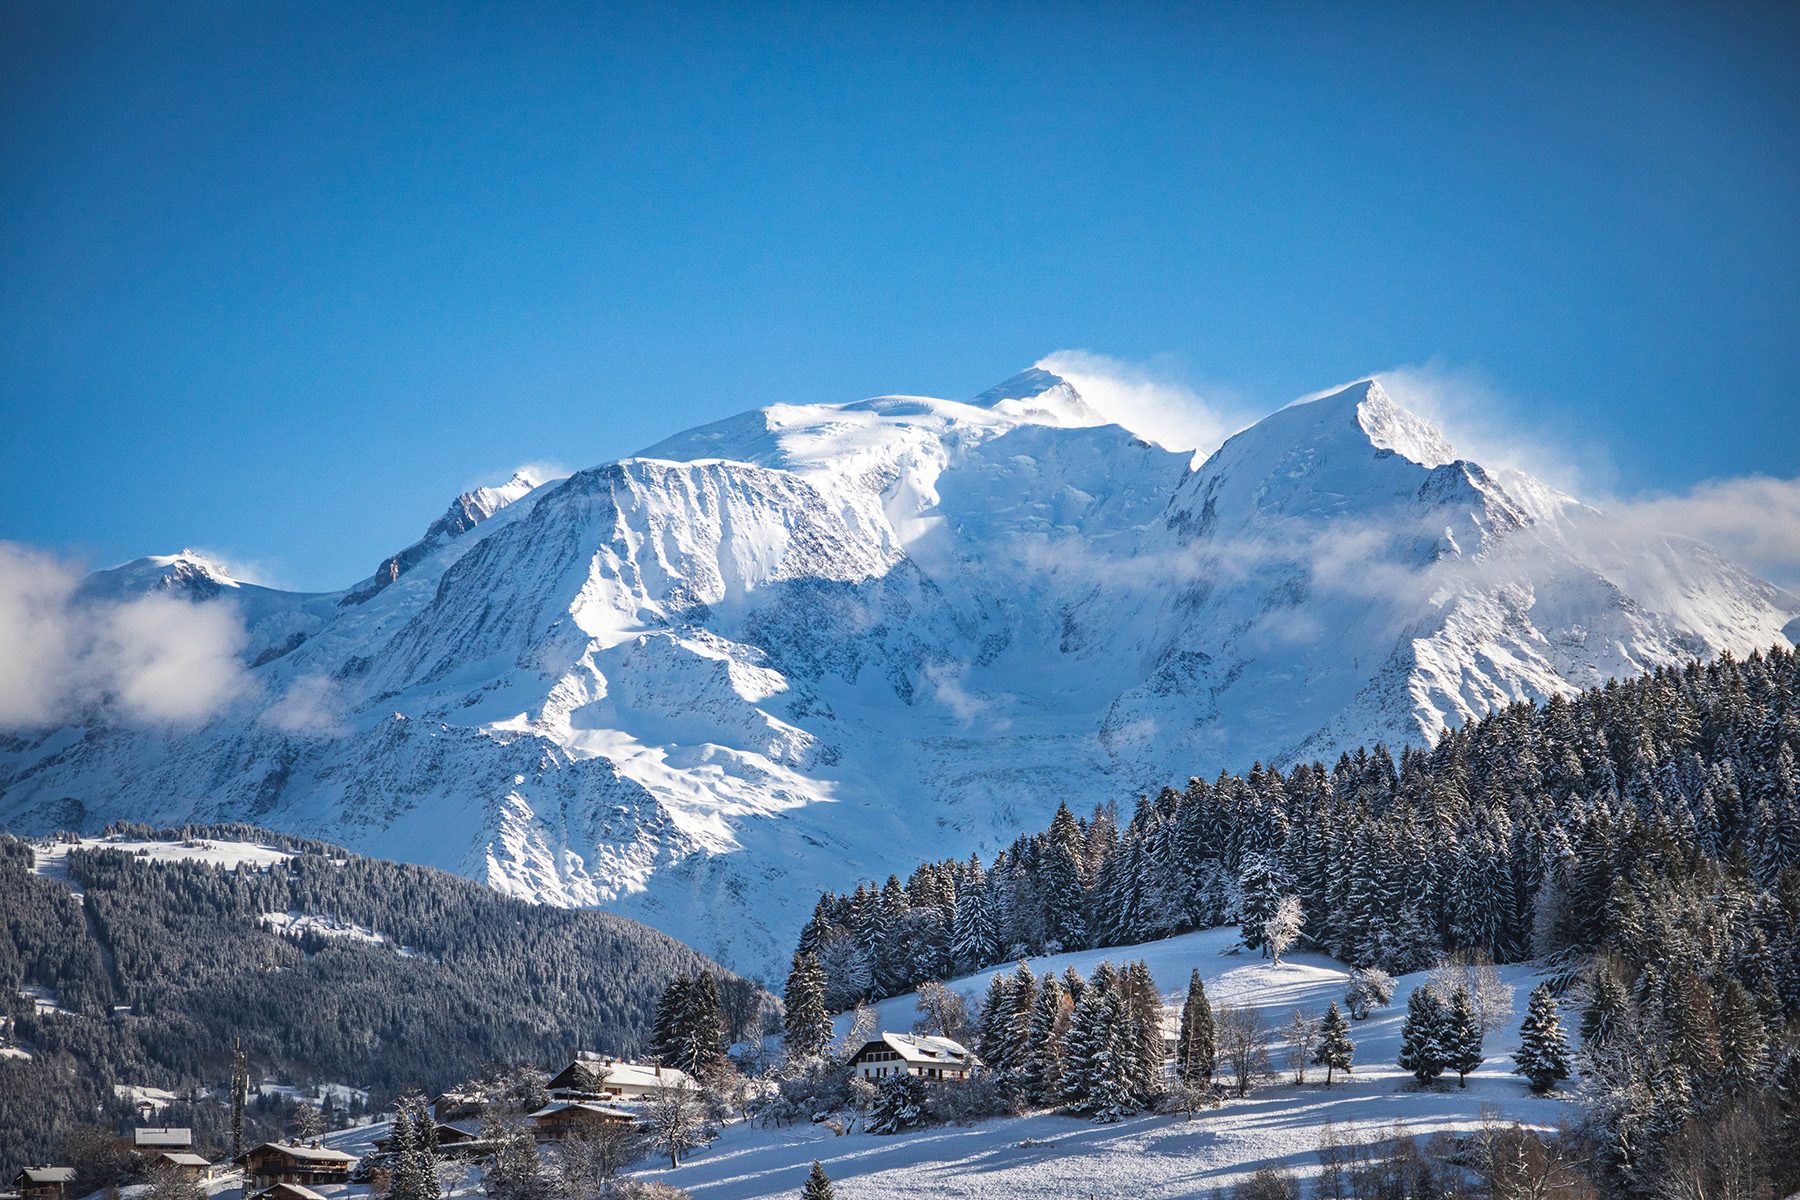 Mont Blanc view from Combloux